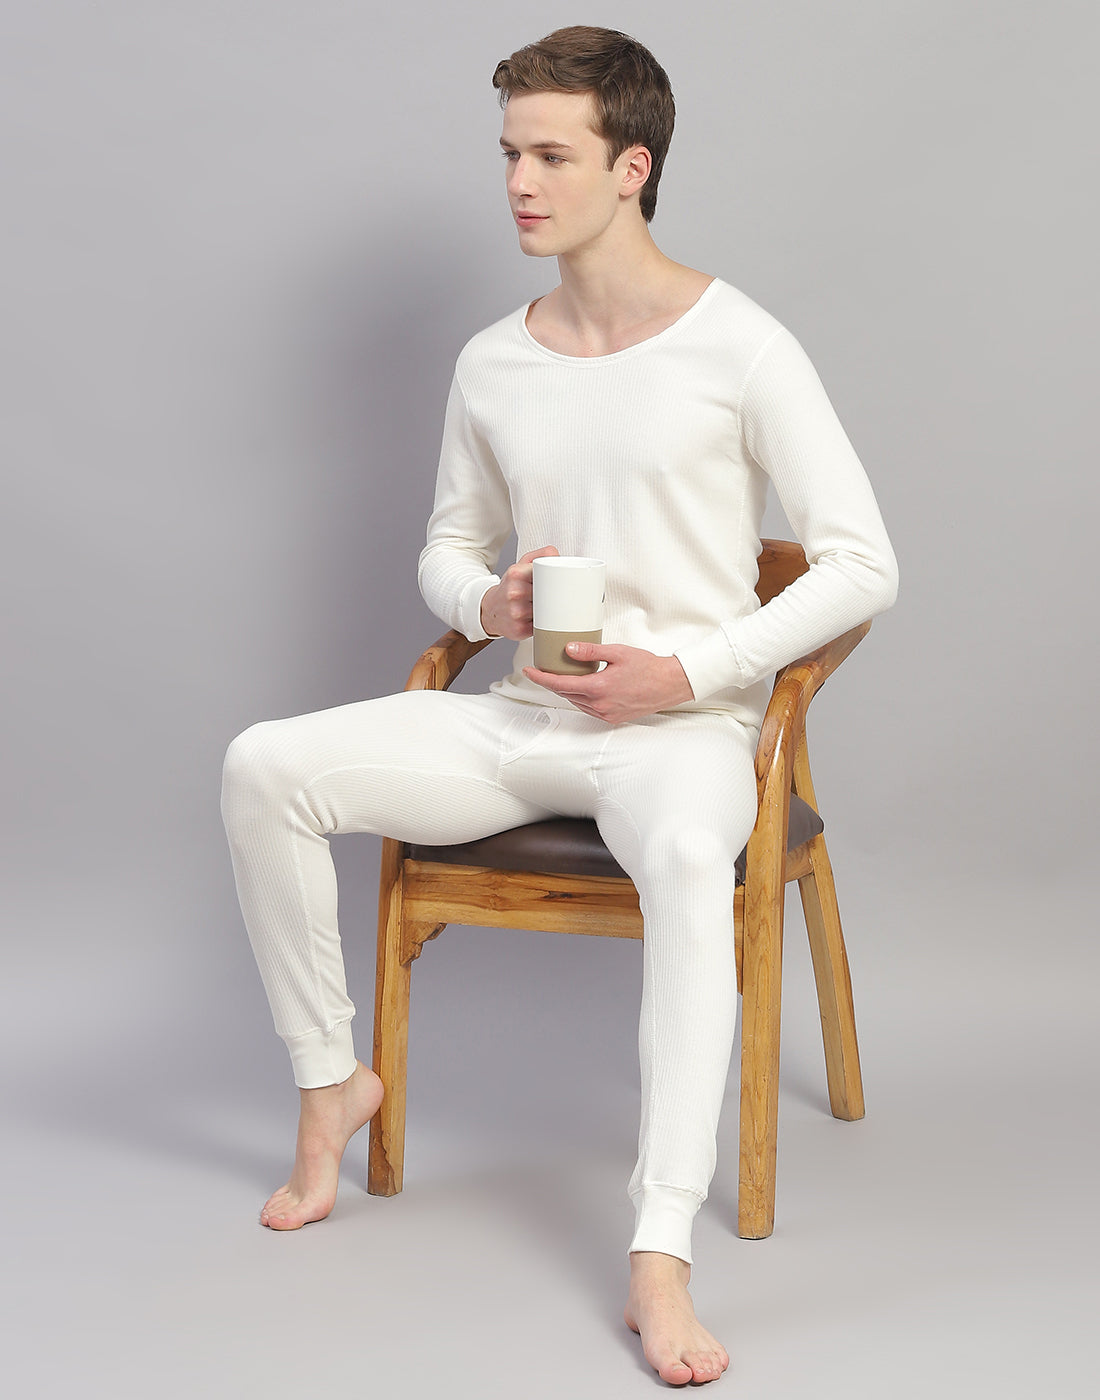 Shop Winter Thermal Inner Wear For Men online